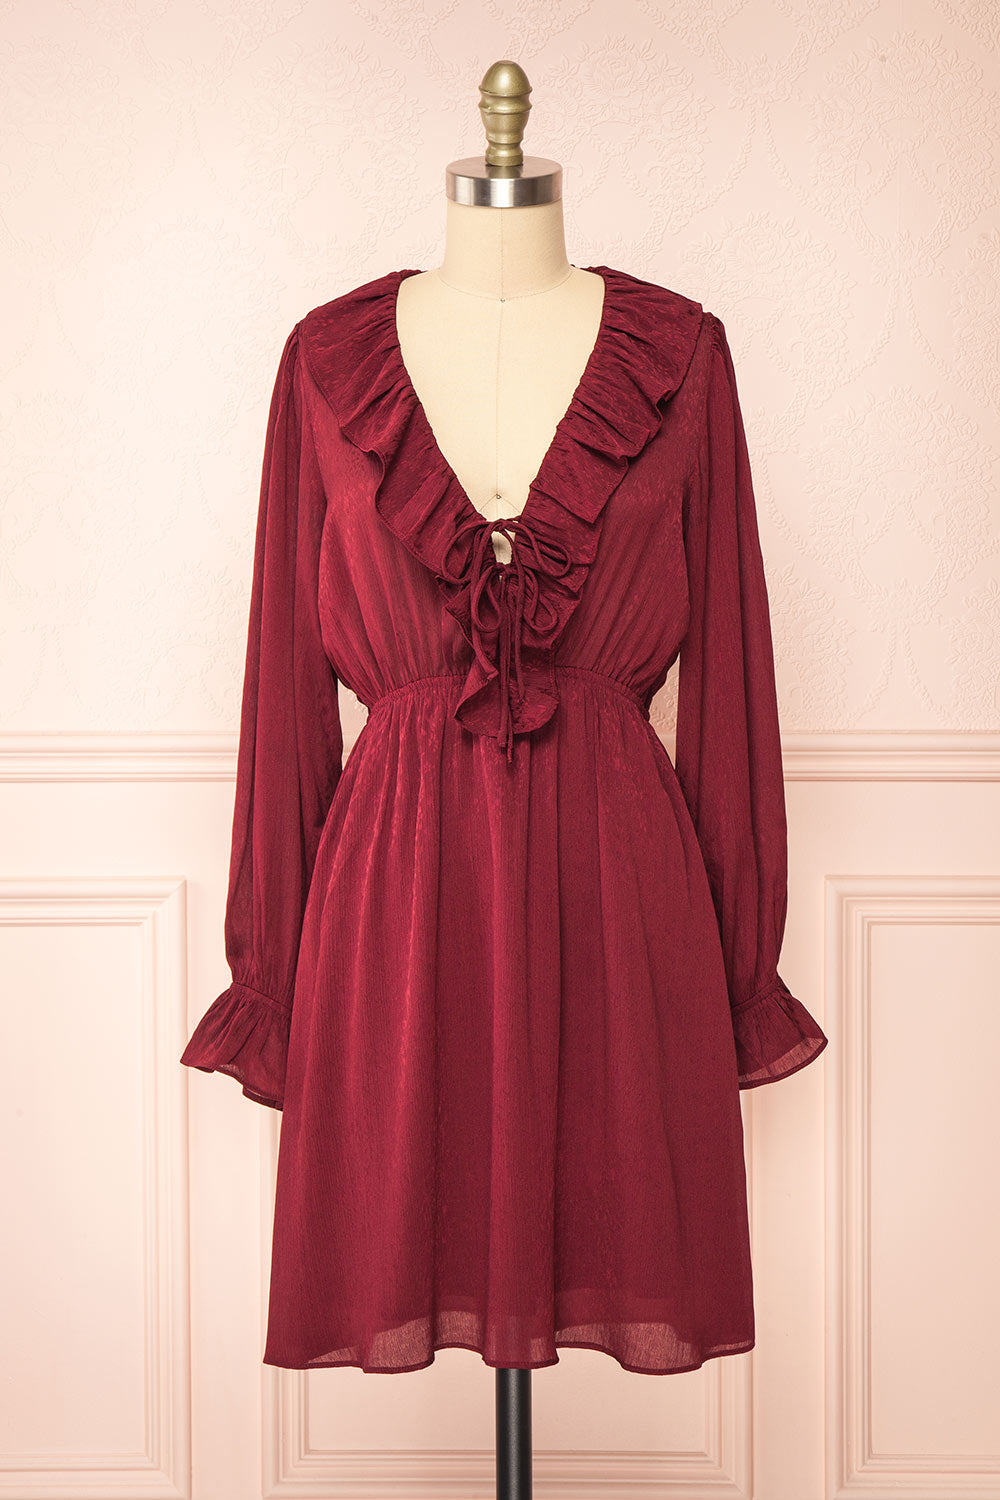 Dana Burgundy Short Dress w/ Ruffled Neckline | Boutique 1861 front view